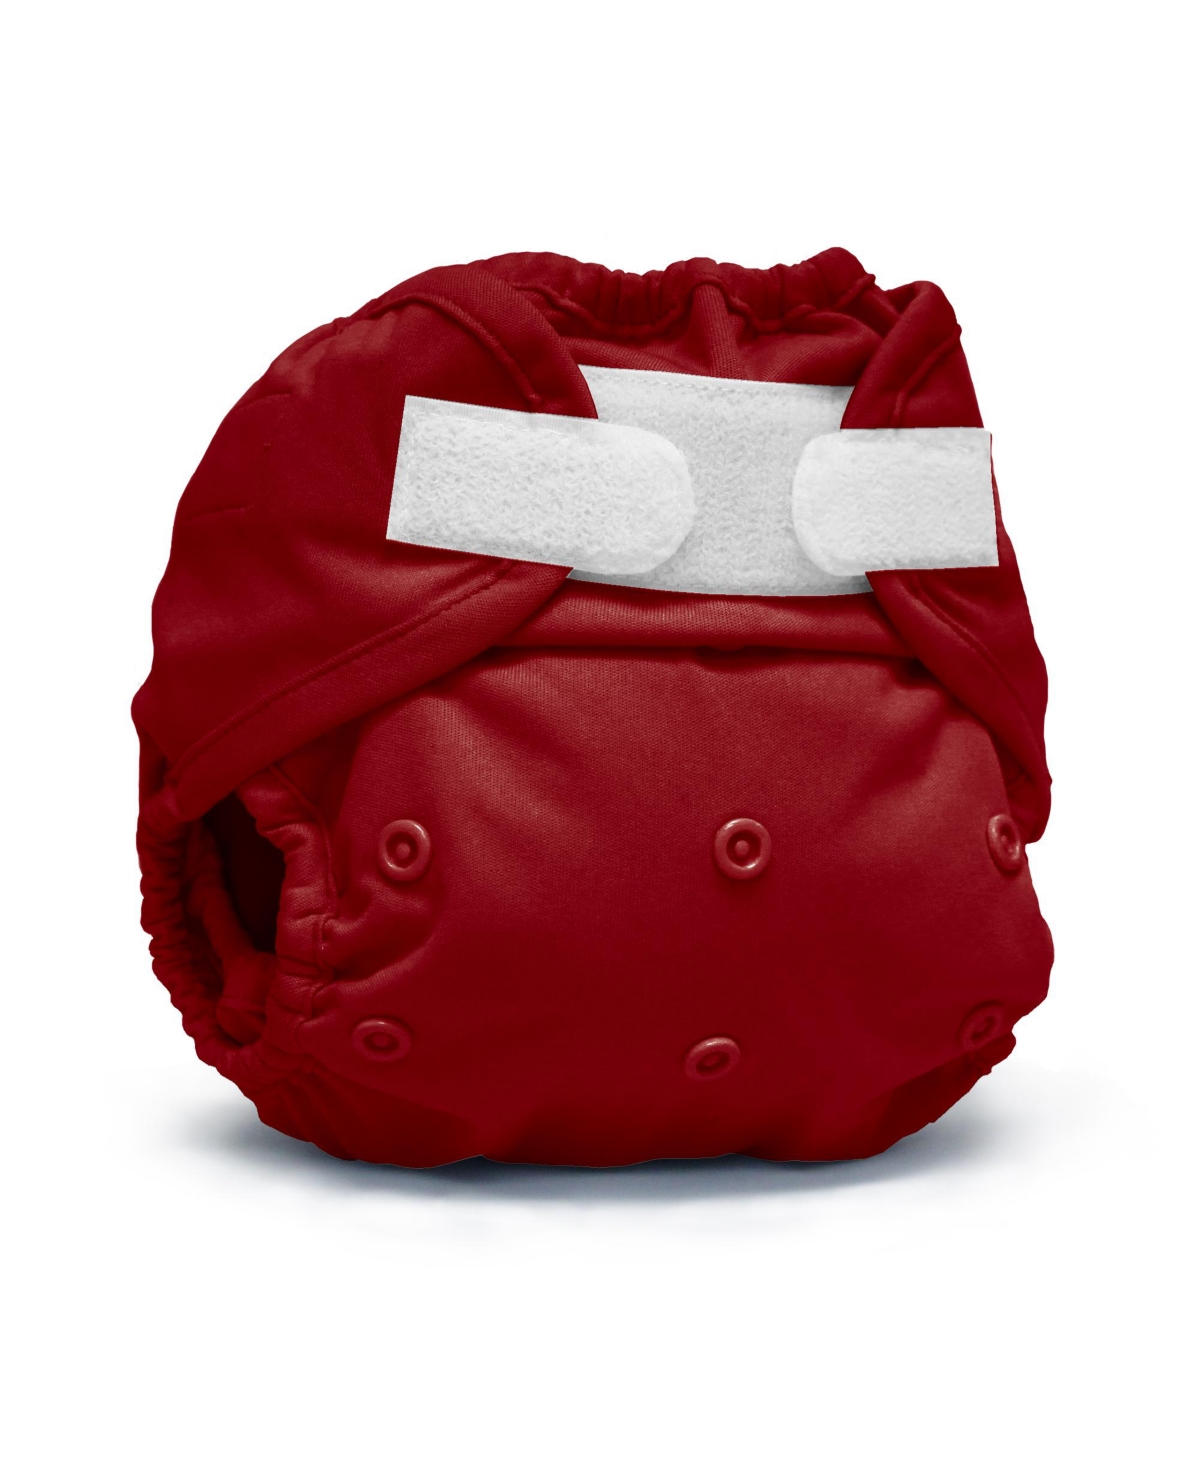 Kanga Care Babies' Rumparooz Reusable One Size Cloth Diaper Cover Aplix In Scarlet